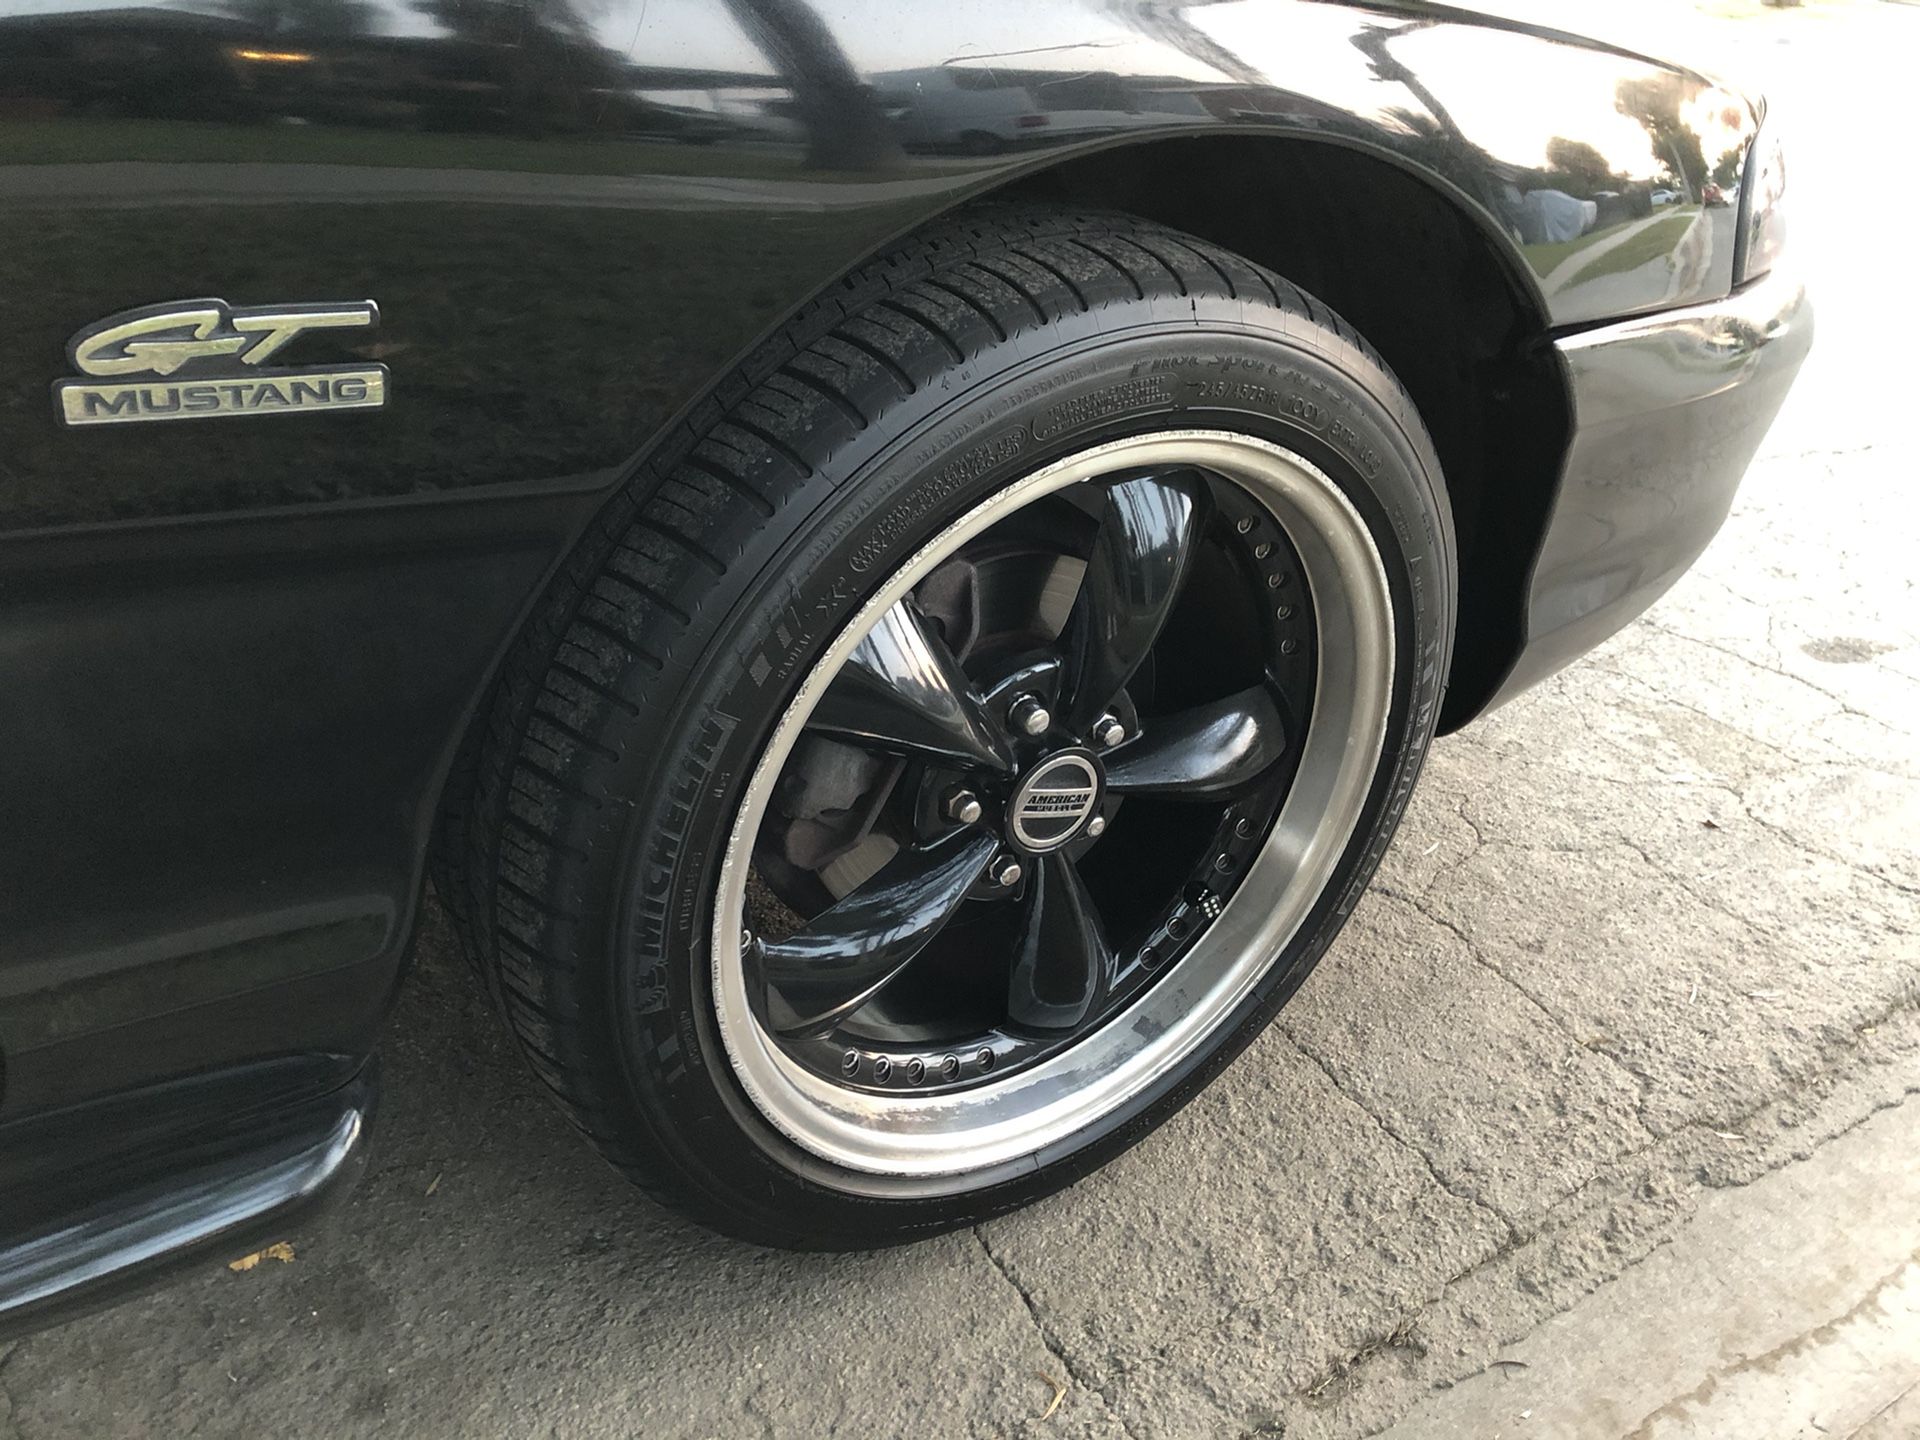 Mustang rims & tires